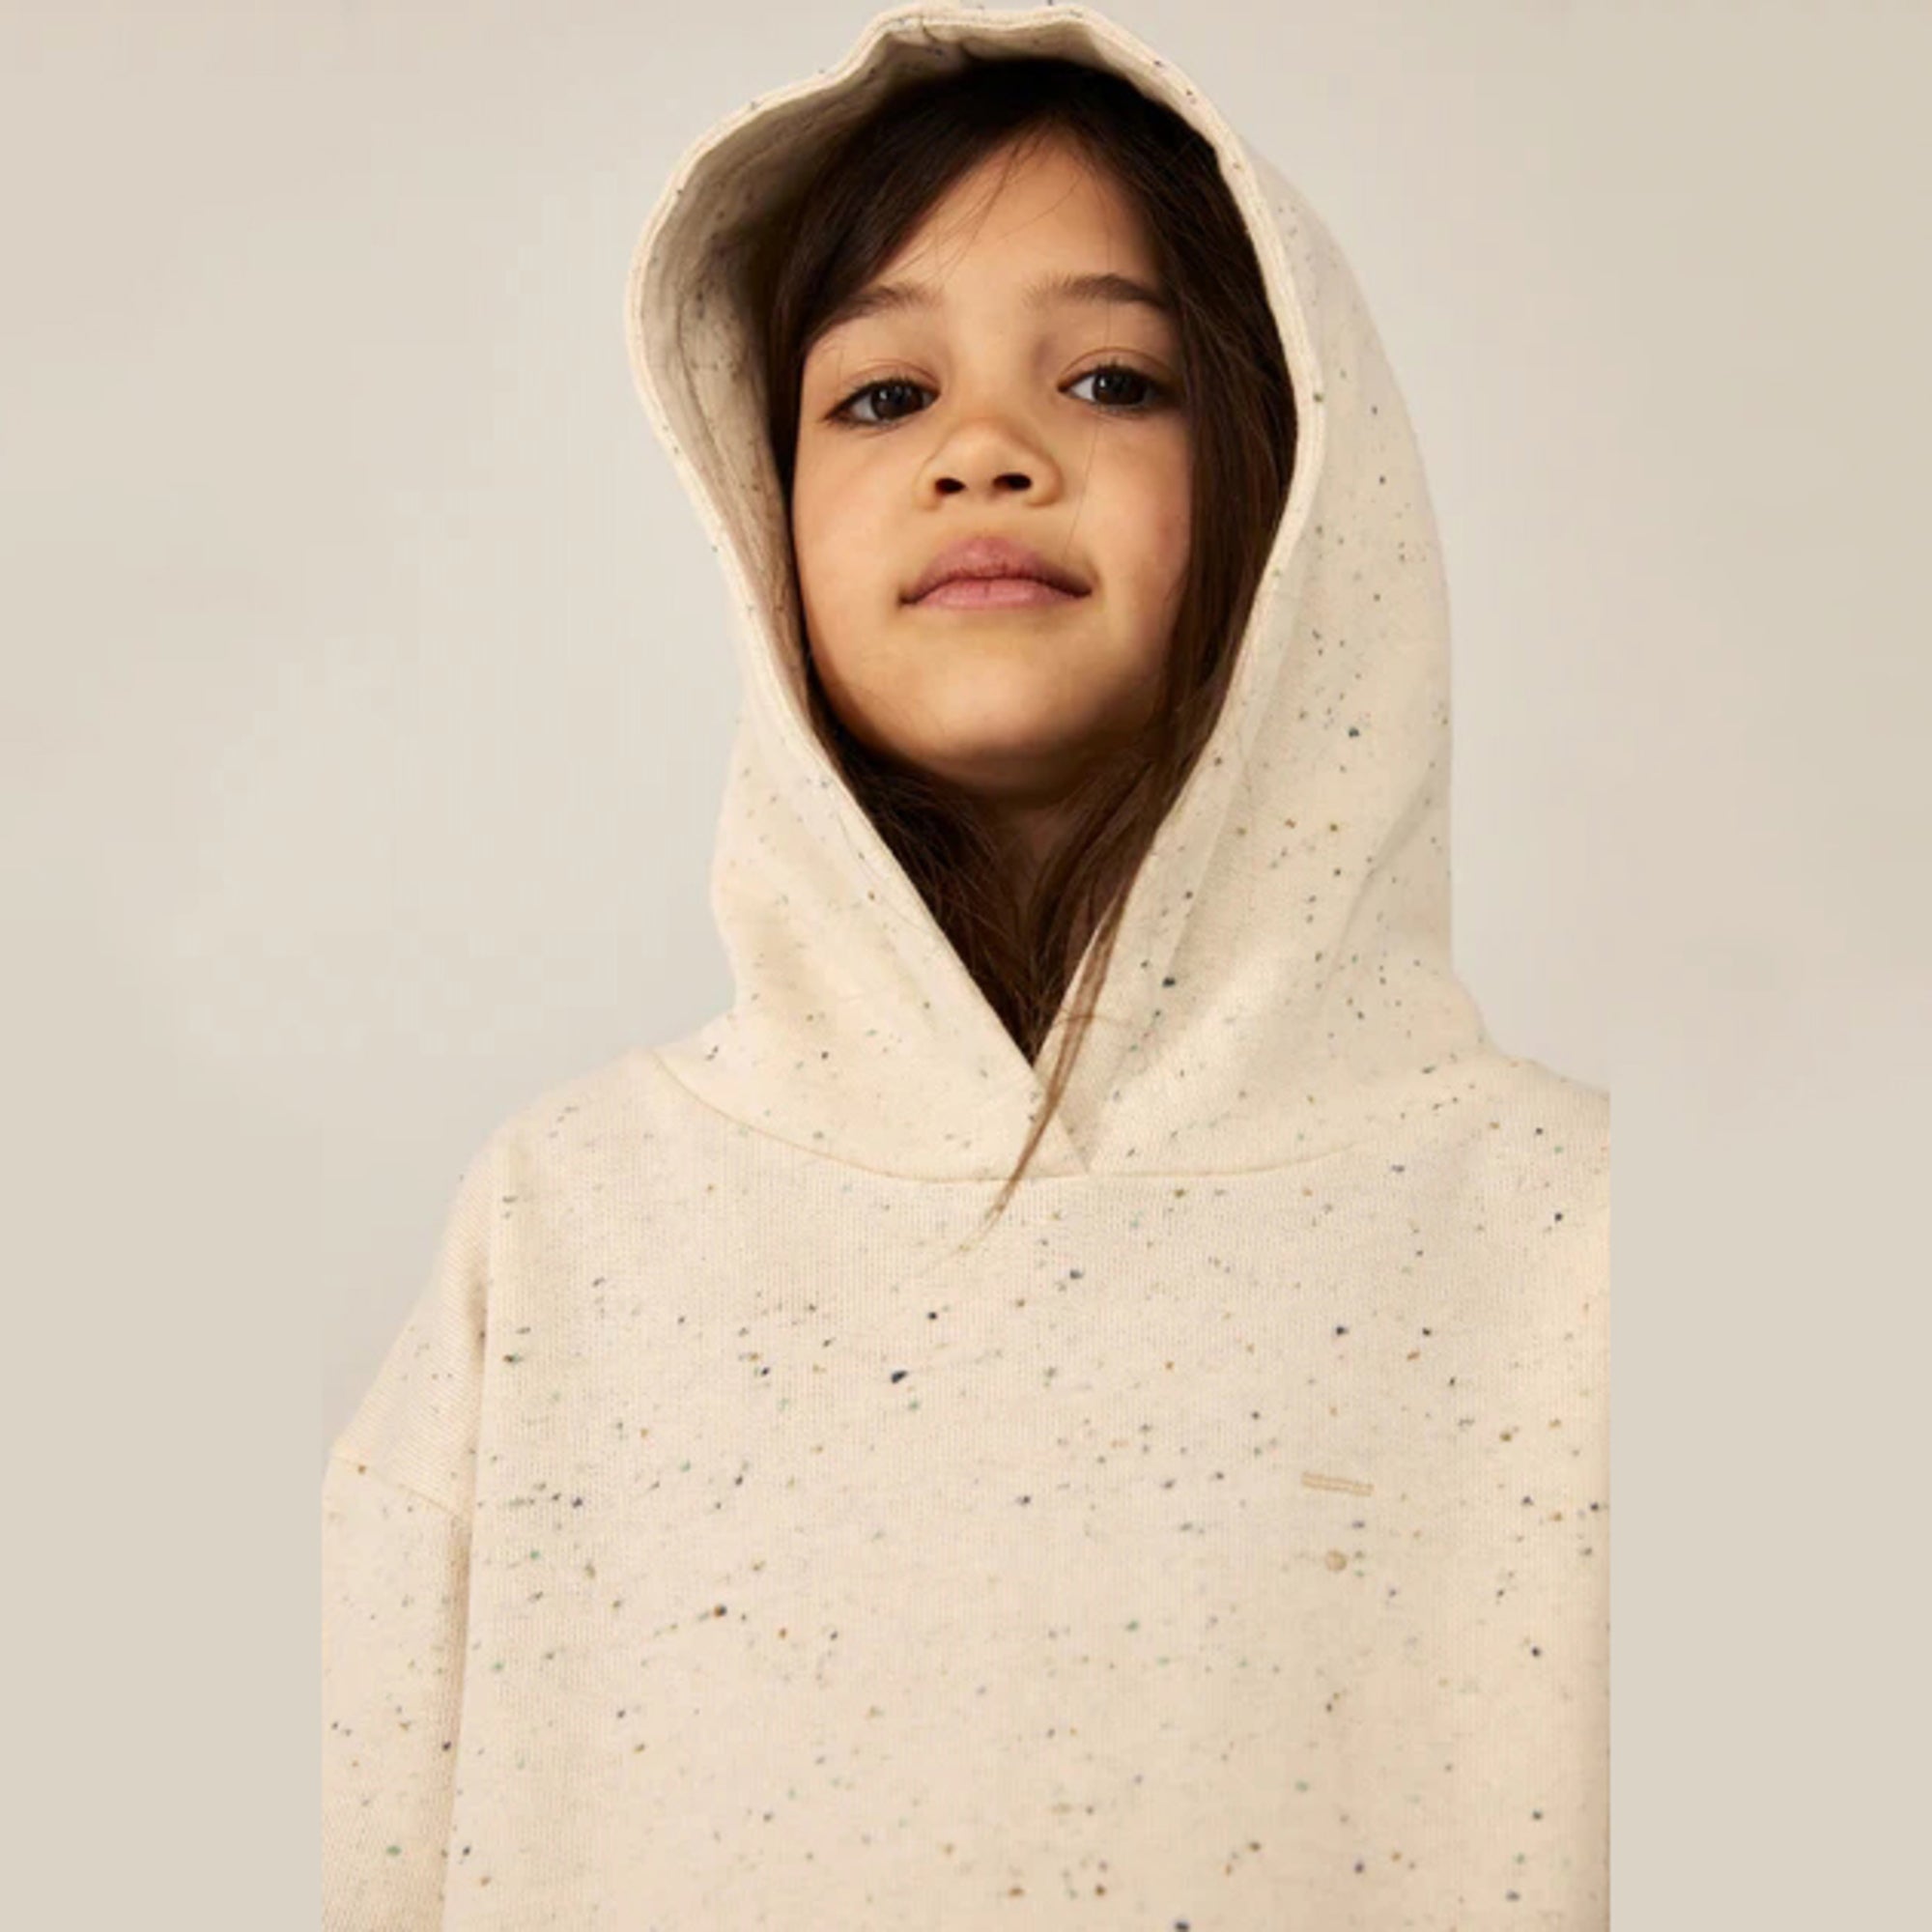 Boys & Girls Beige Cotton Hooded Sweatshirt